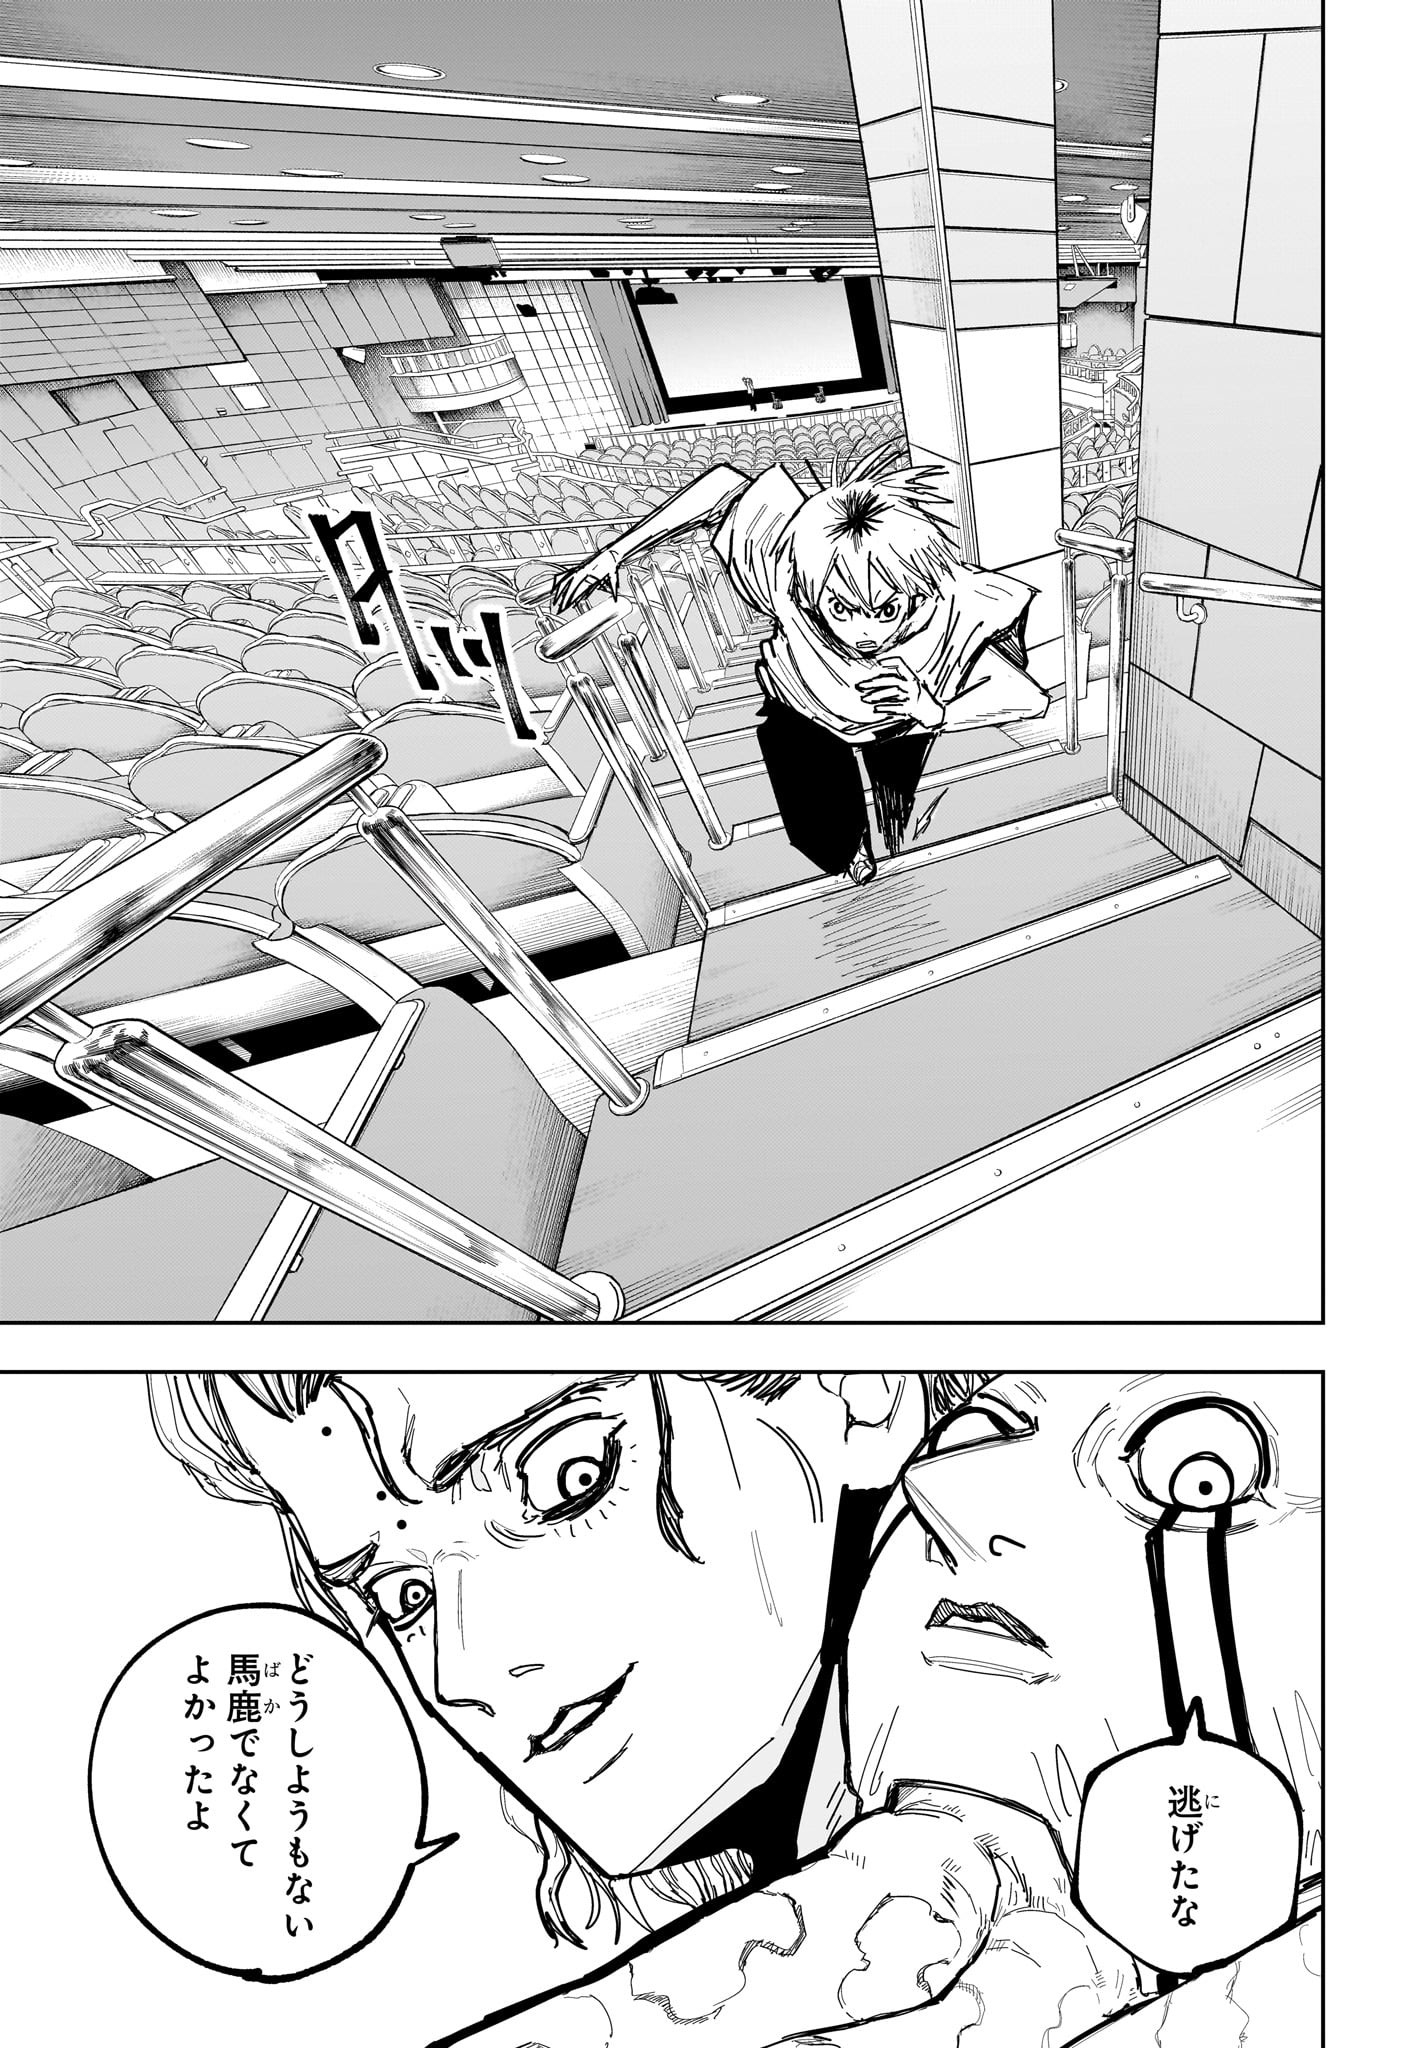 Kyokuto Necromance - Chapter 12 - Page 5